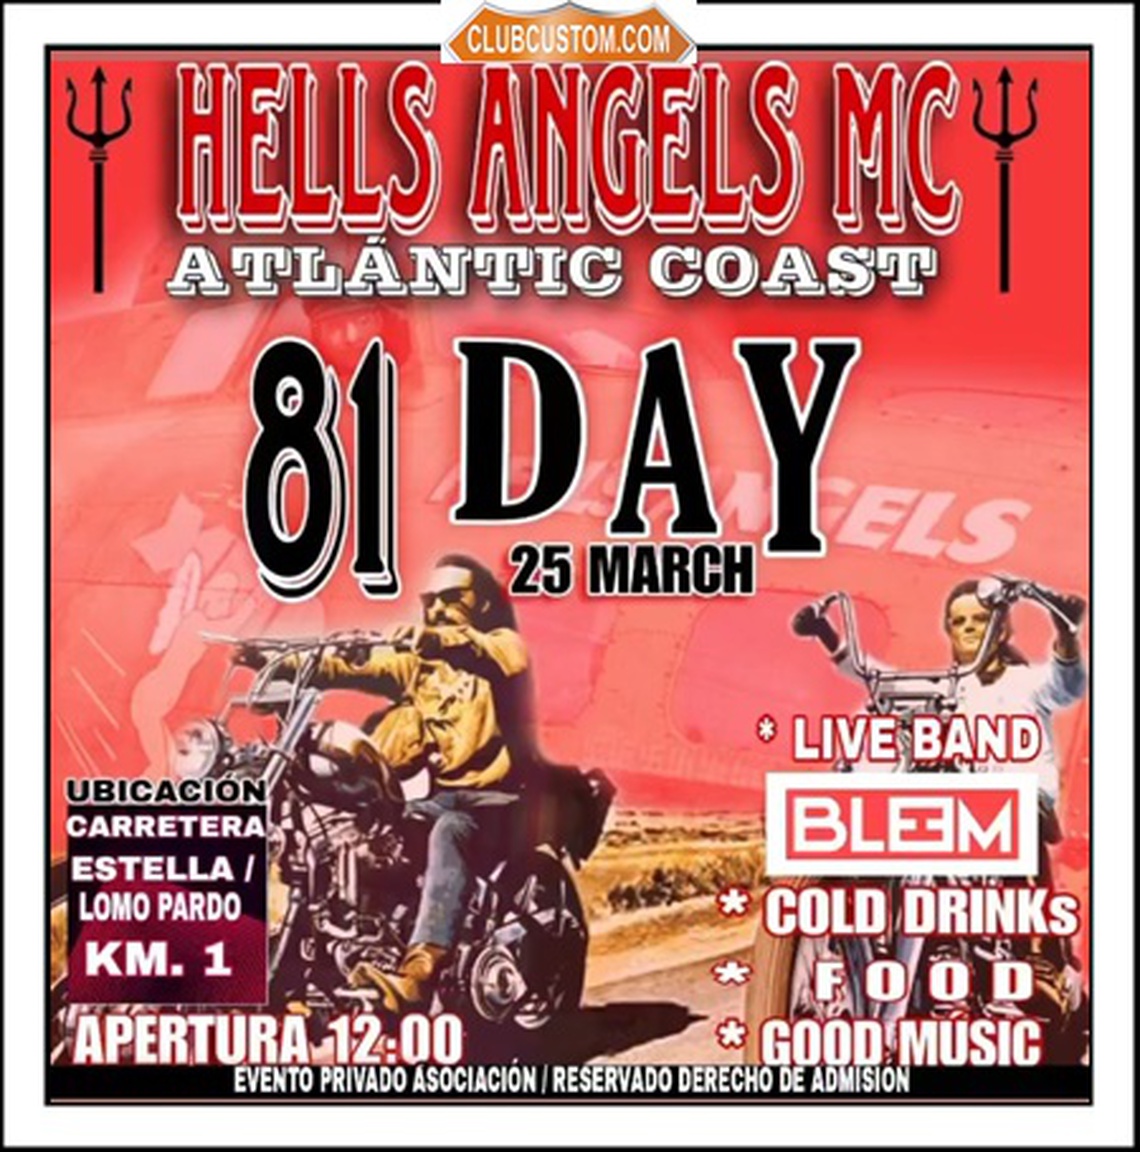 81 DAY HELLS ANGELS MC ATLANTIC COAST